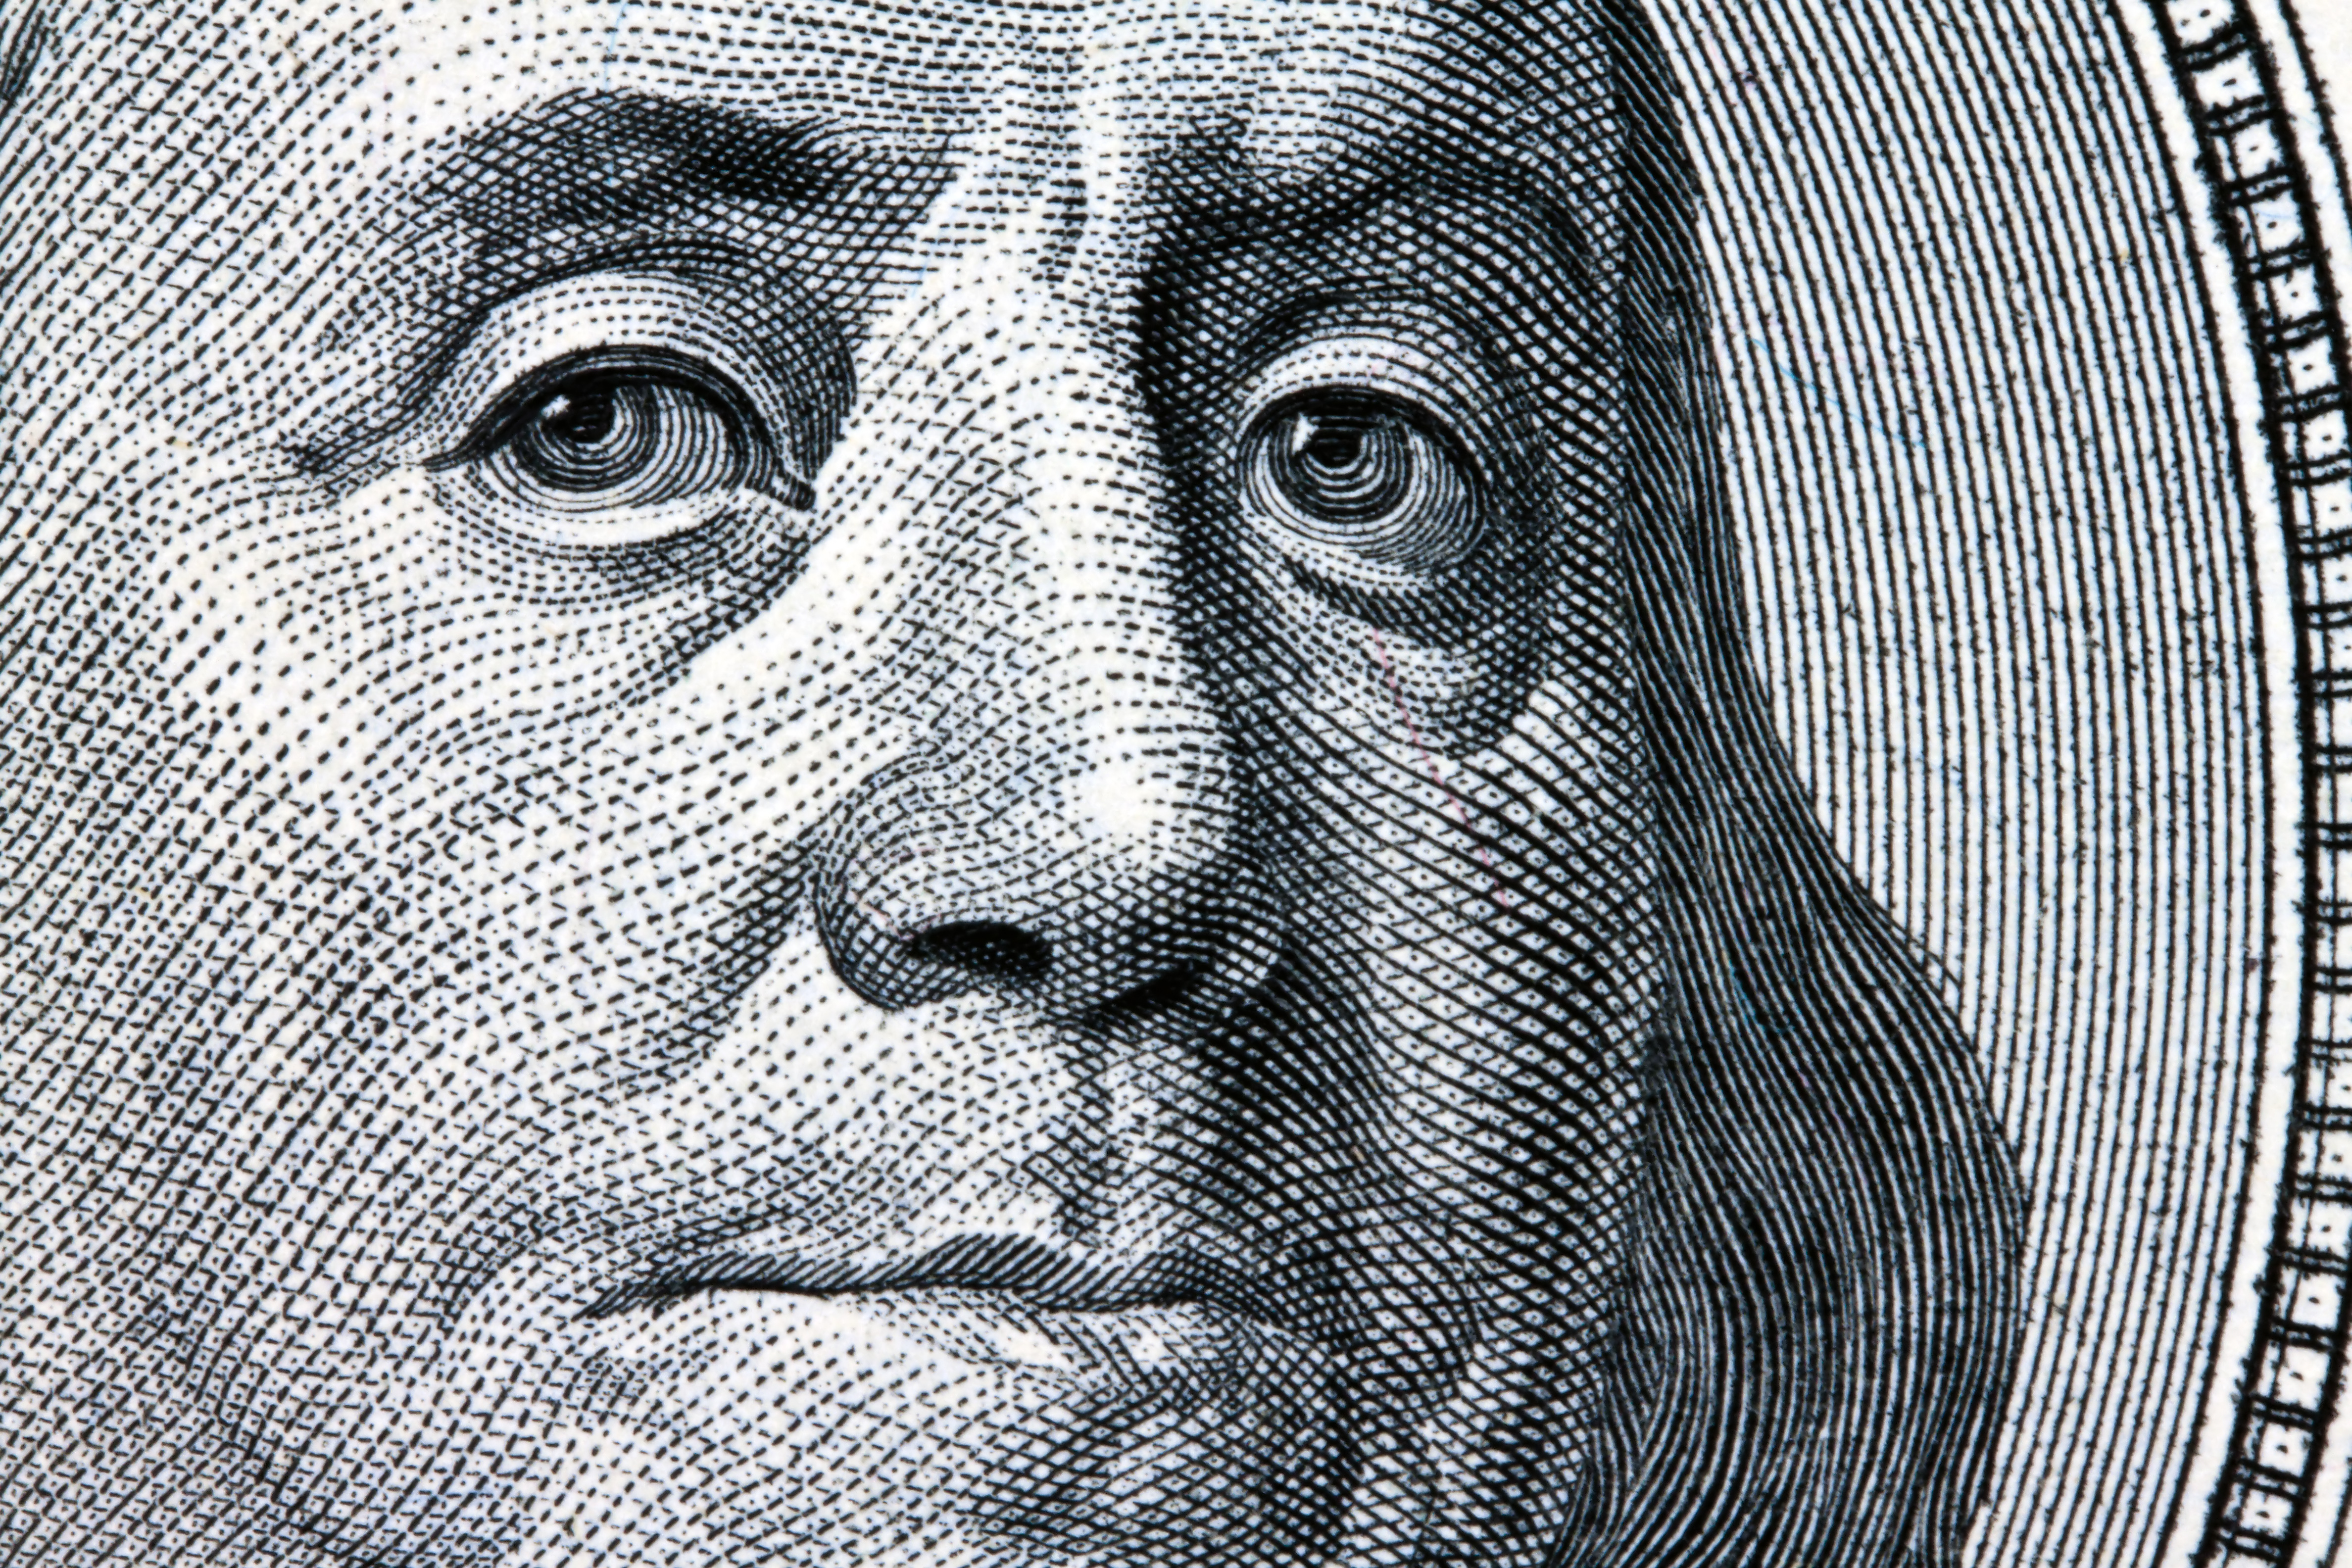 Washington on dollar note